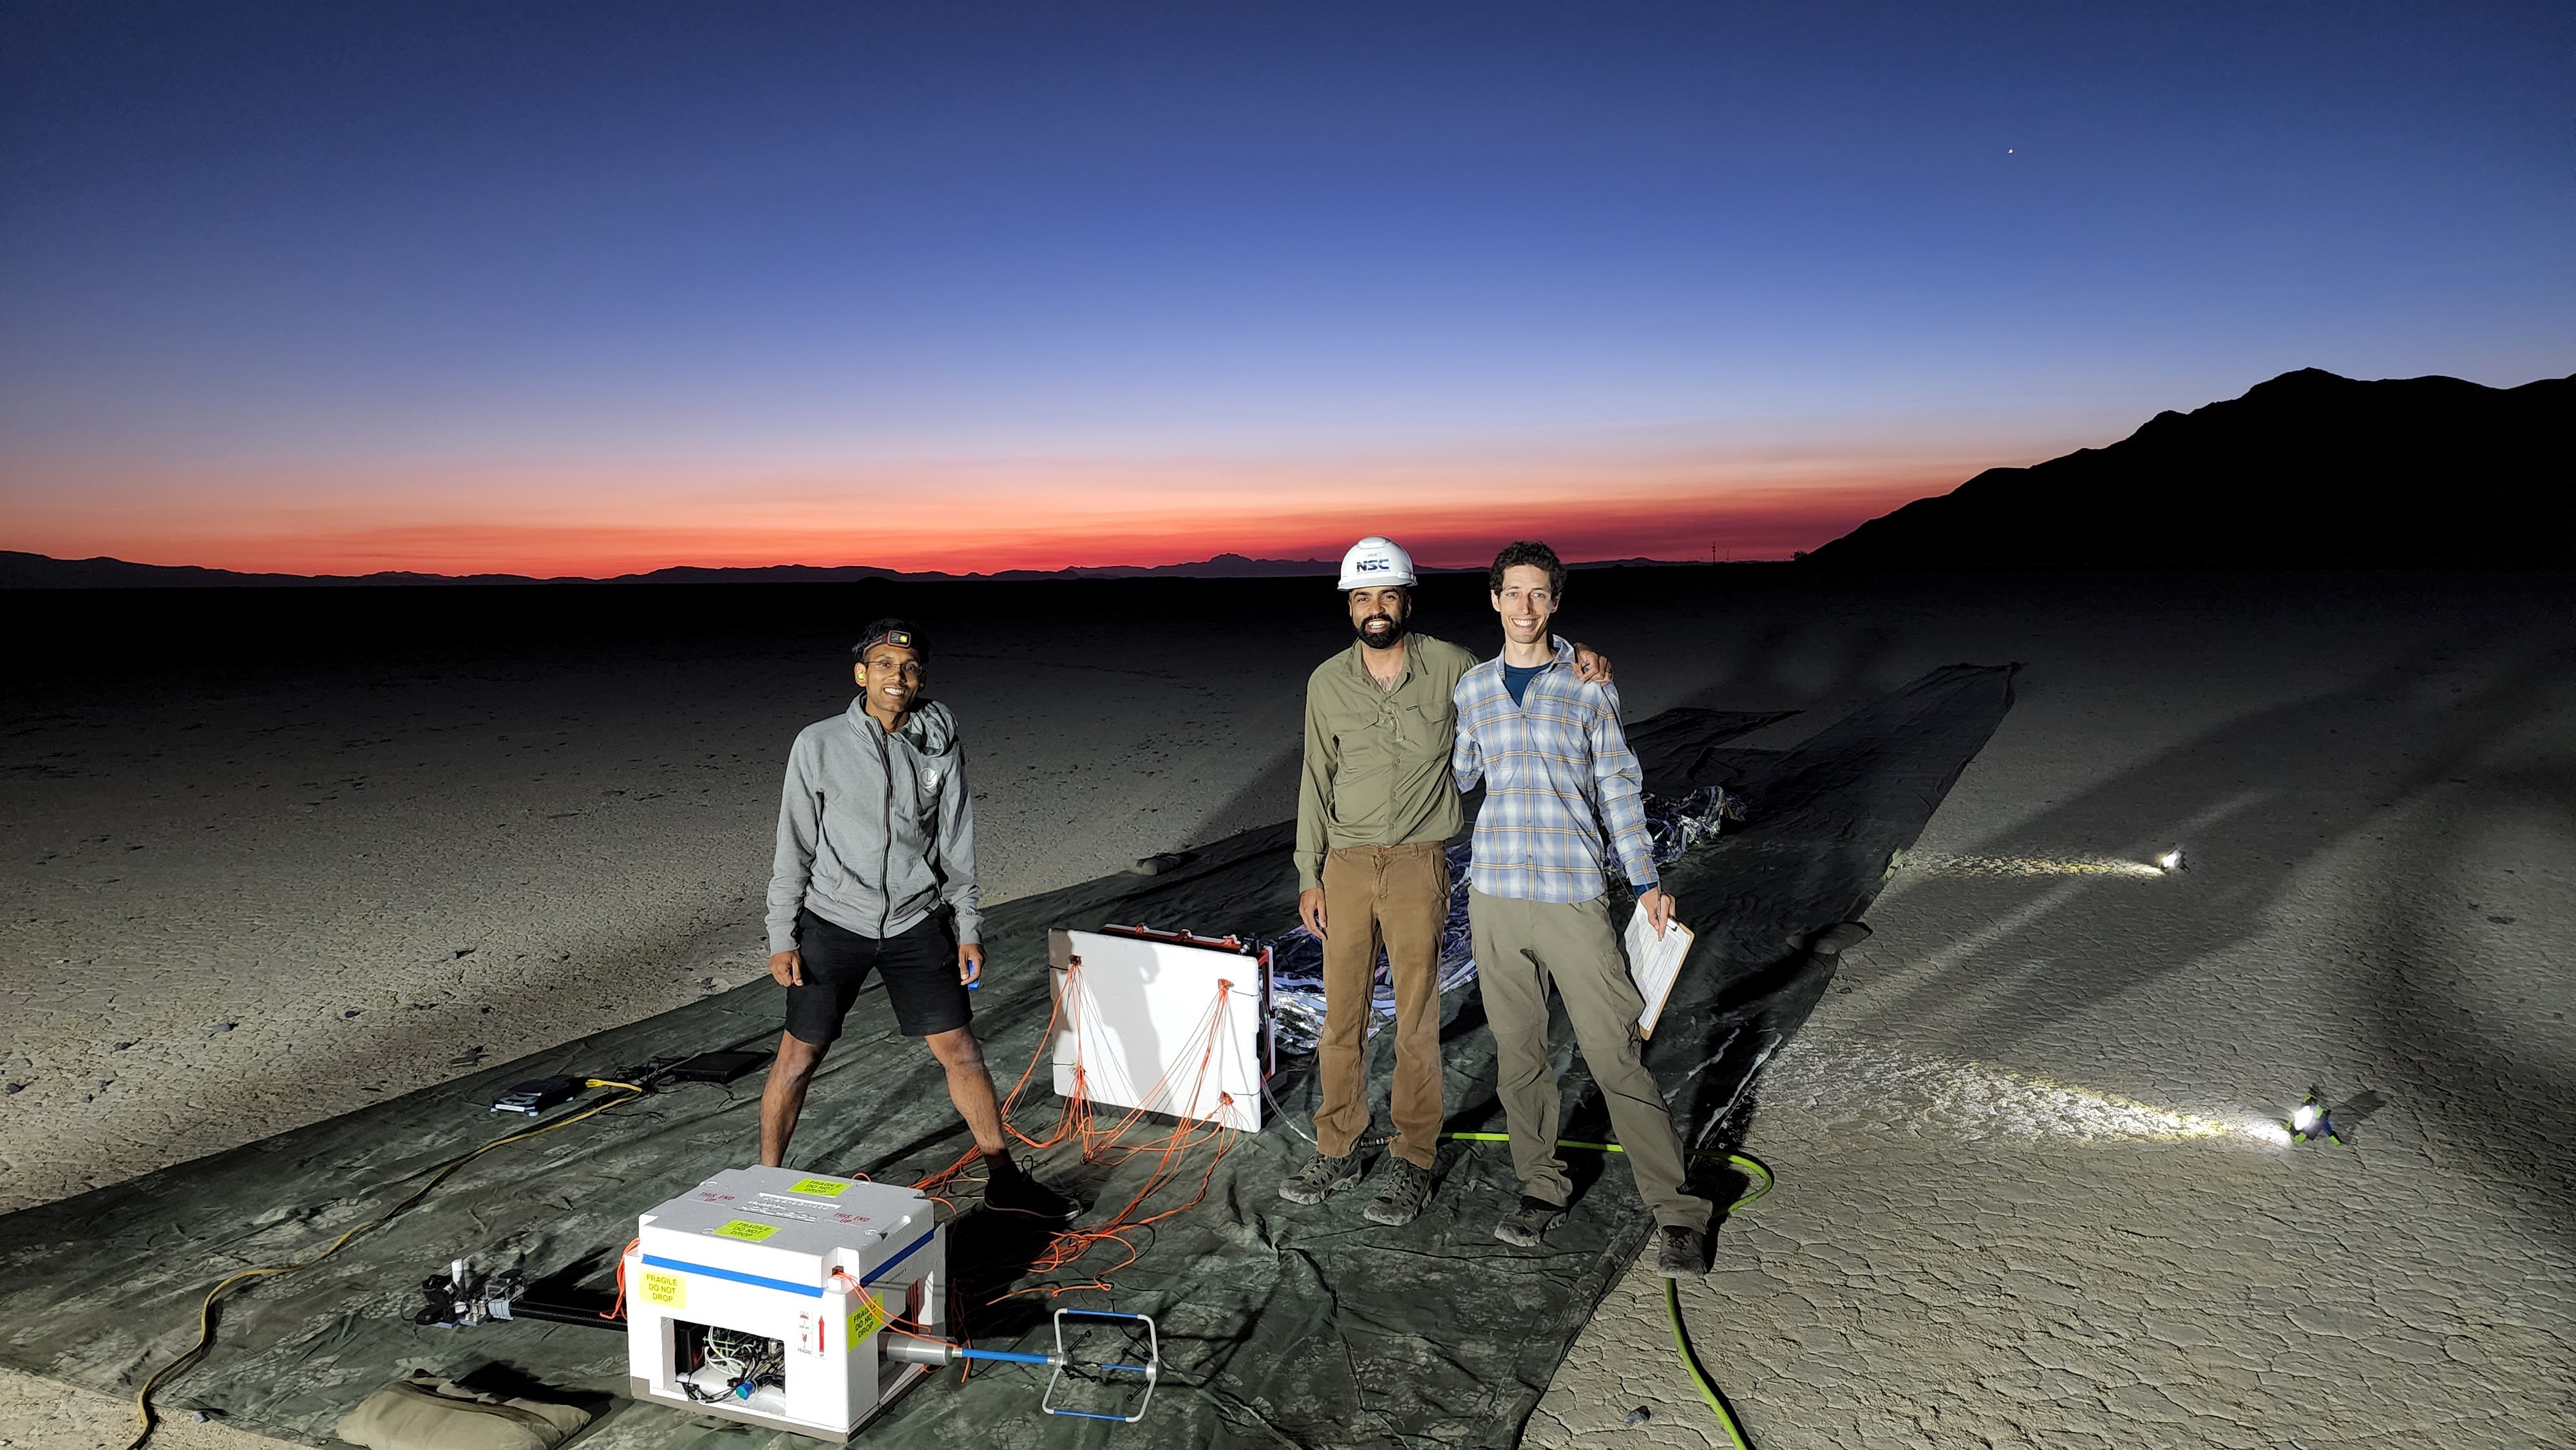 Picture: [Left to right] Ashish Goel (JPL), Siddharth Krishnamoorthy (JPL), and Jacob Izraelevitz (JPL) set up the aerobot prototype as the planet Venus rises in the Eastern sky.